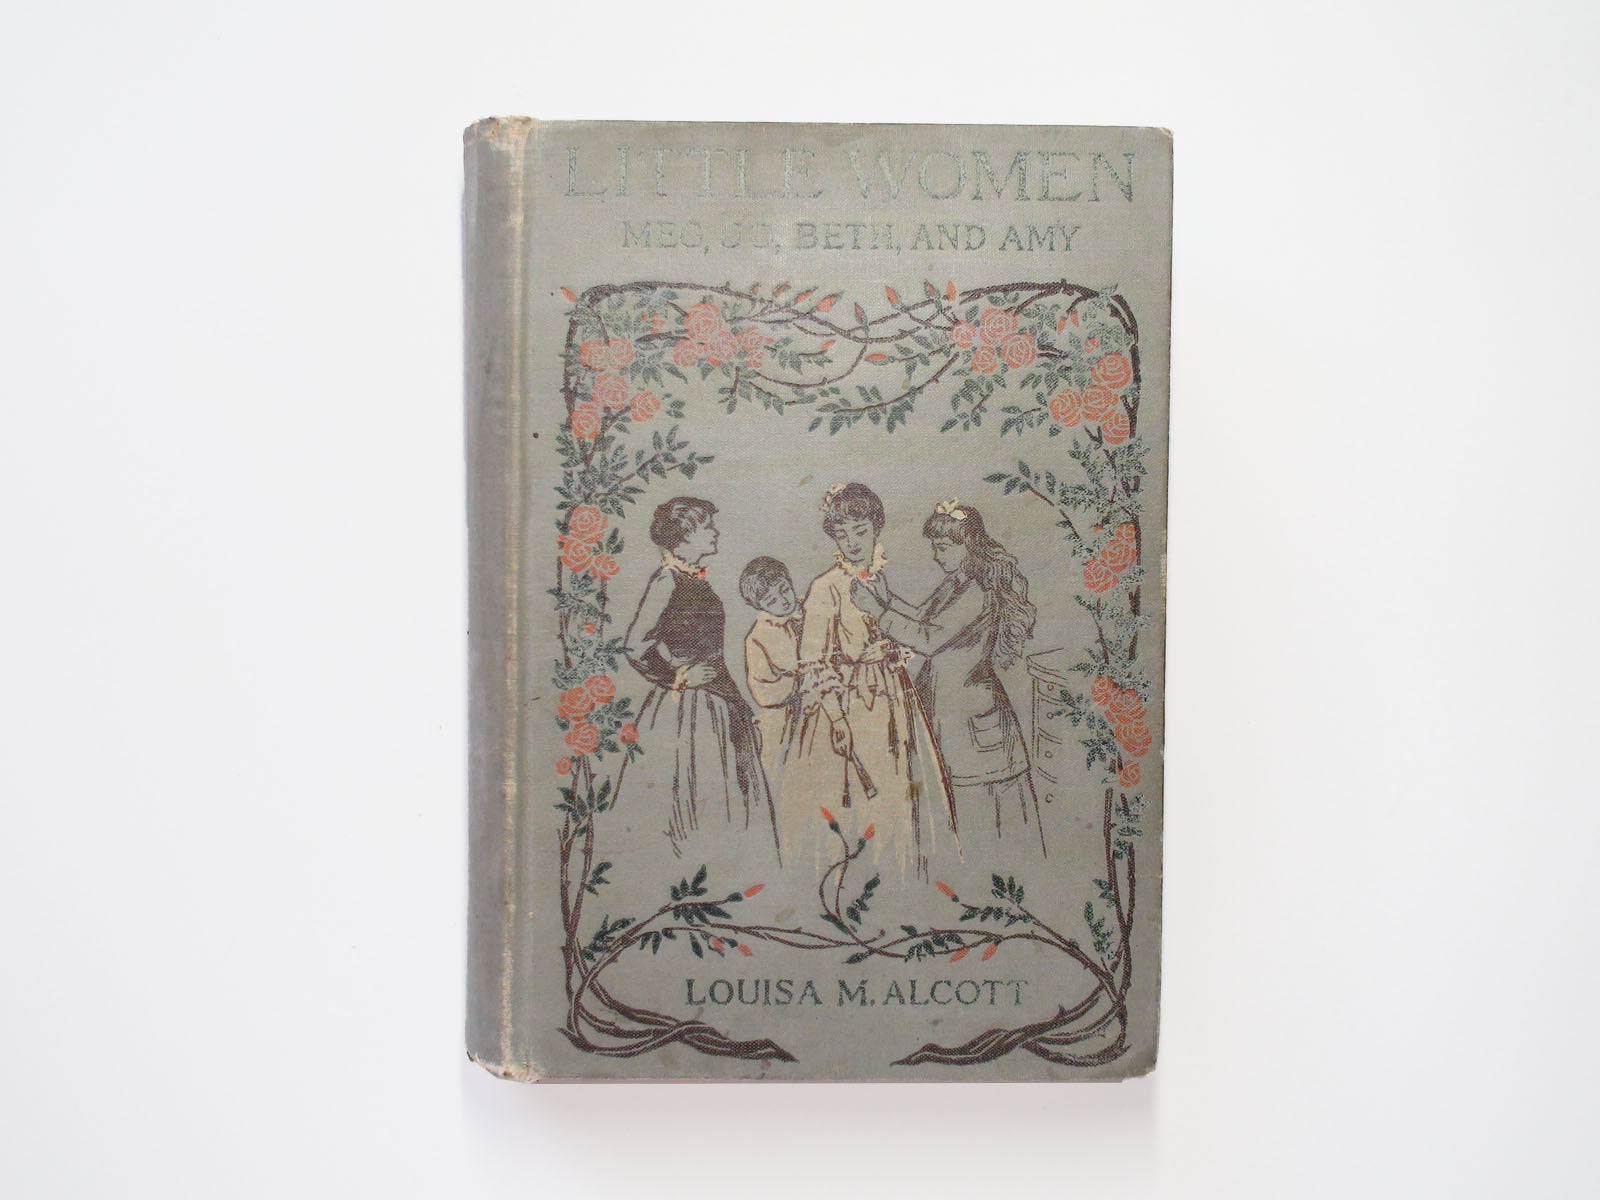 Little Women or Meg, Jo, Beth, and Amy, Louisa M. Alcott, Illustrated, 1896